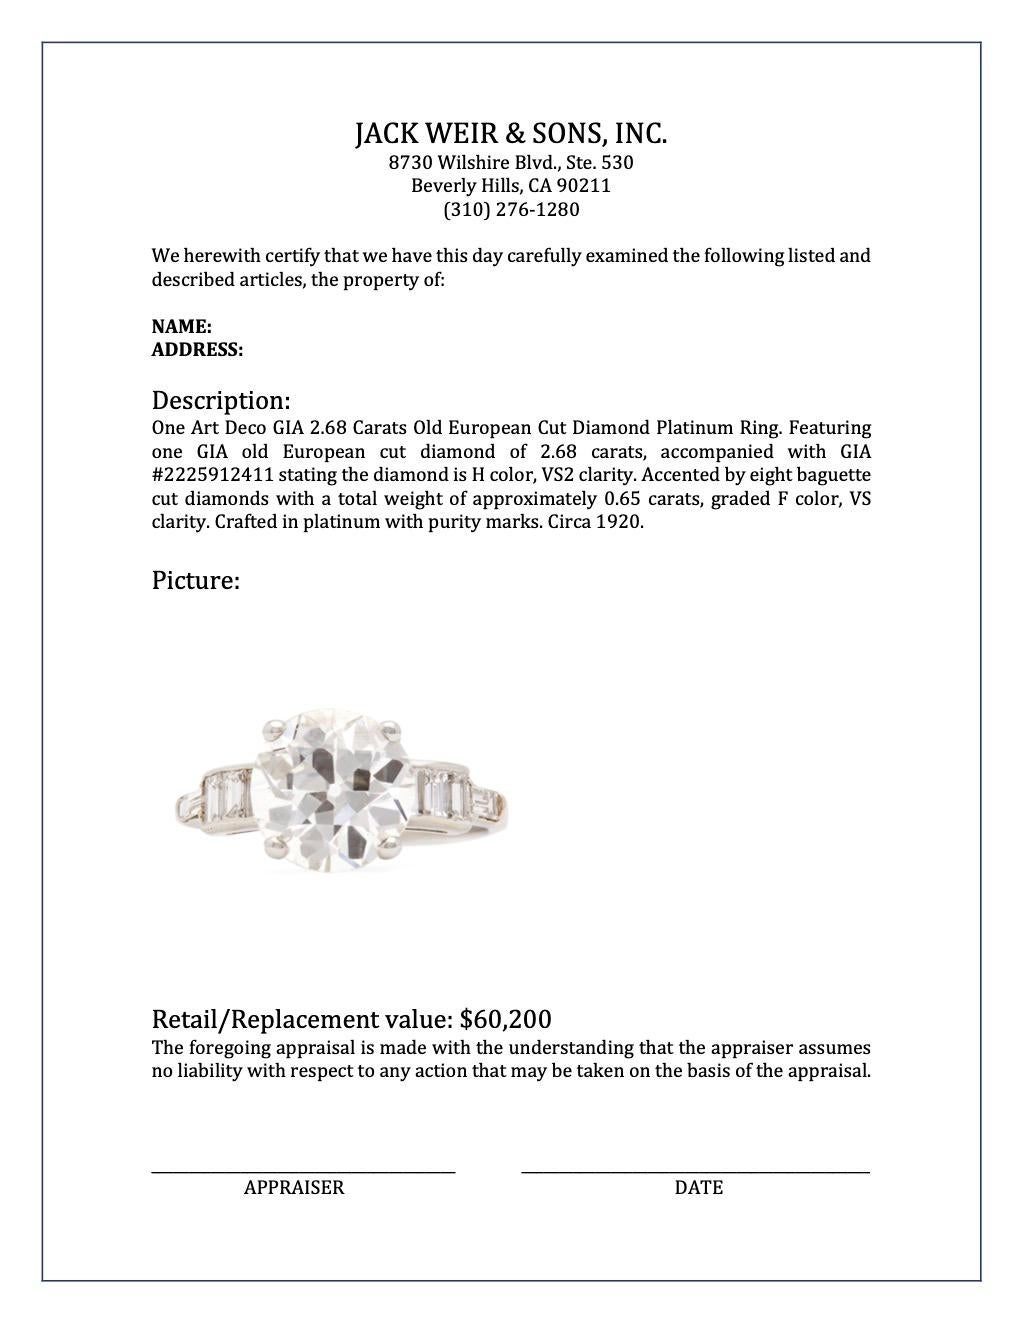 Art Deco GIA 2.68 Carats Old European Cut Diamond Platinum Ring 4